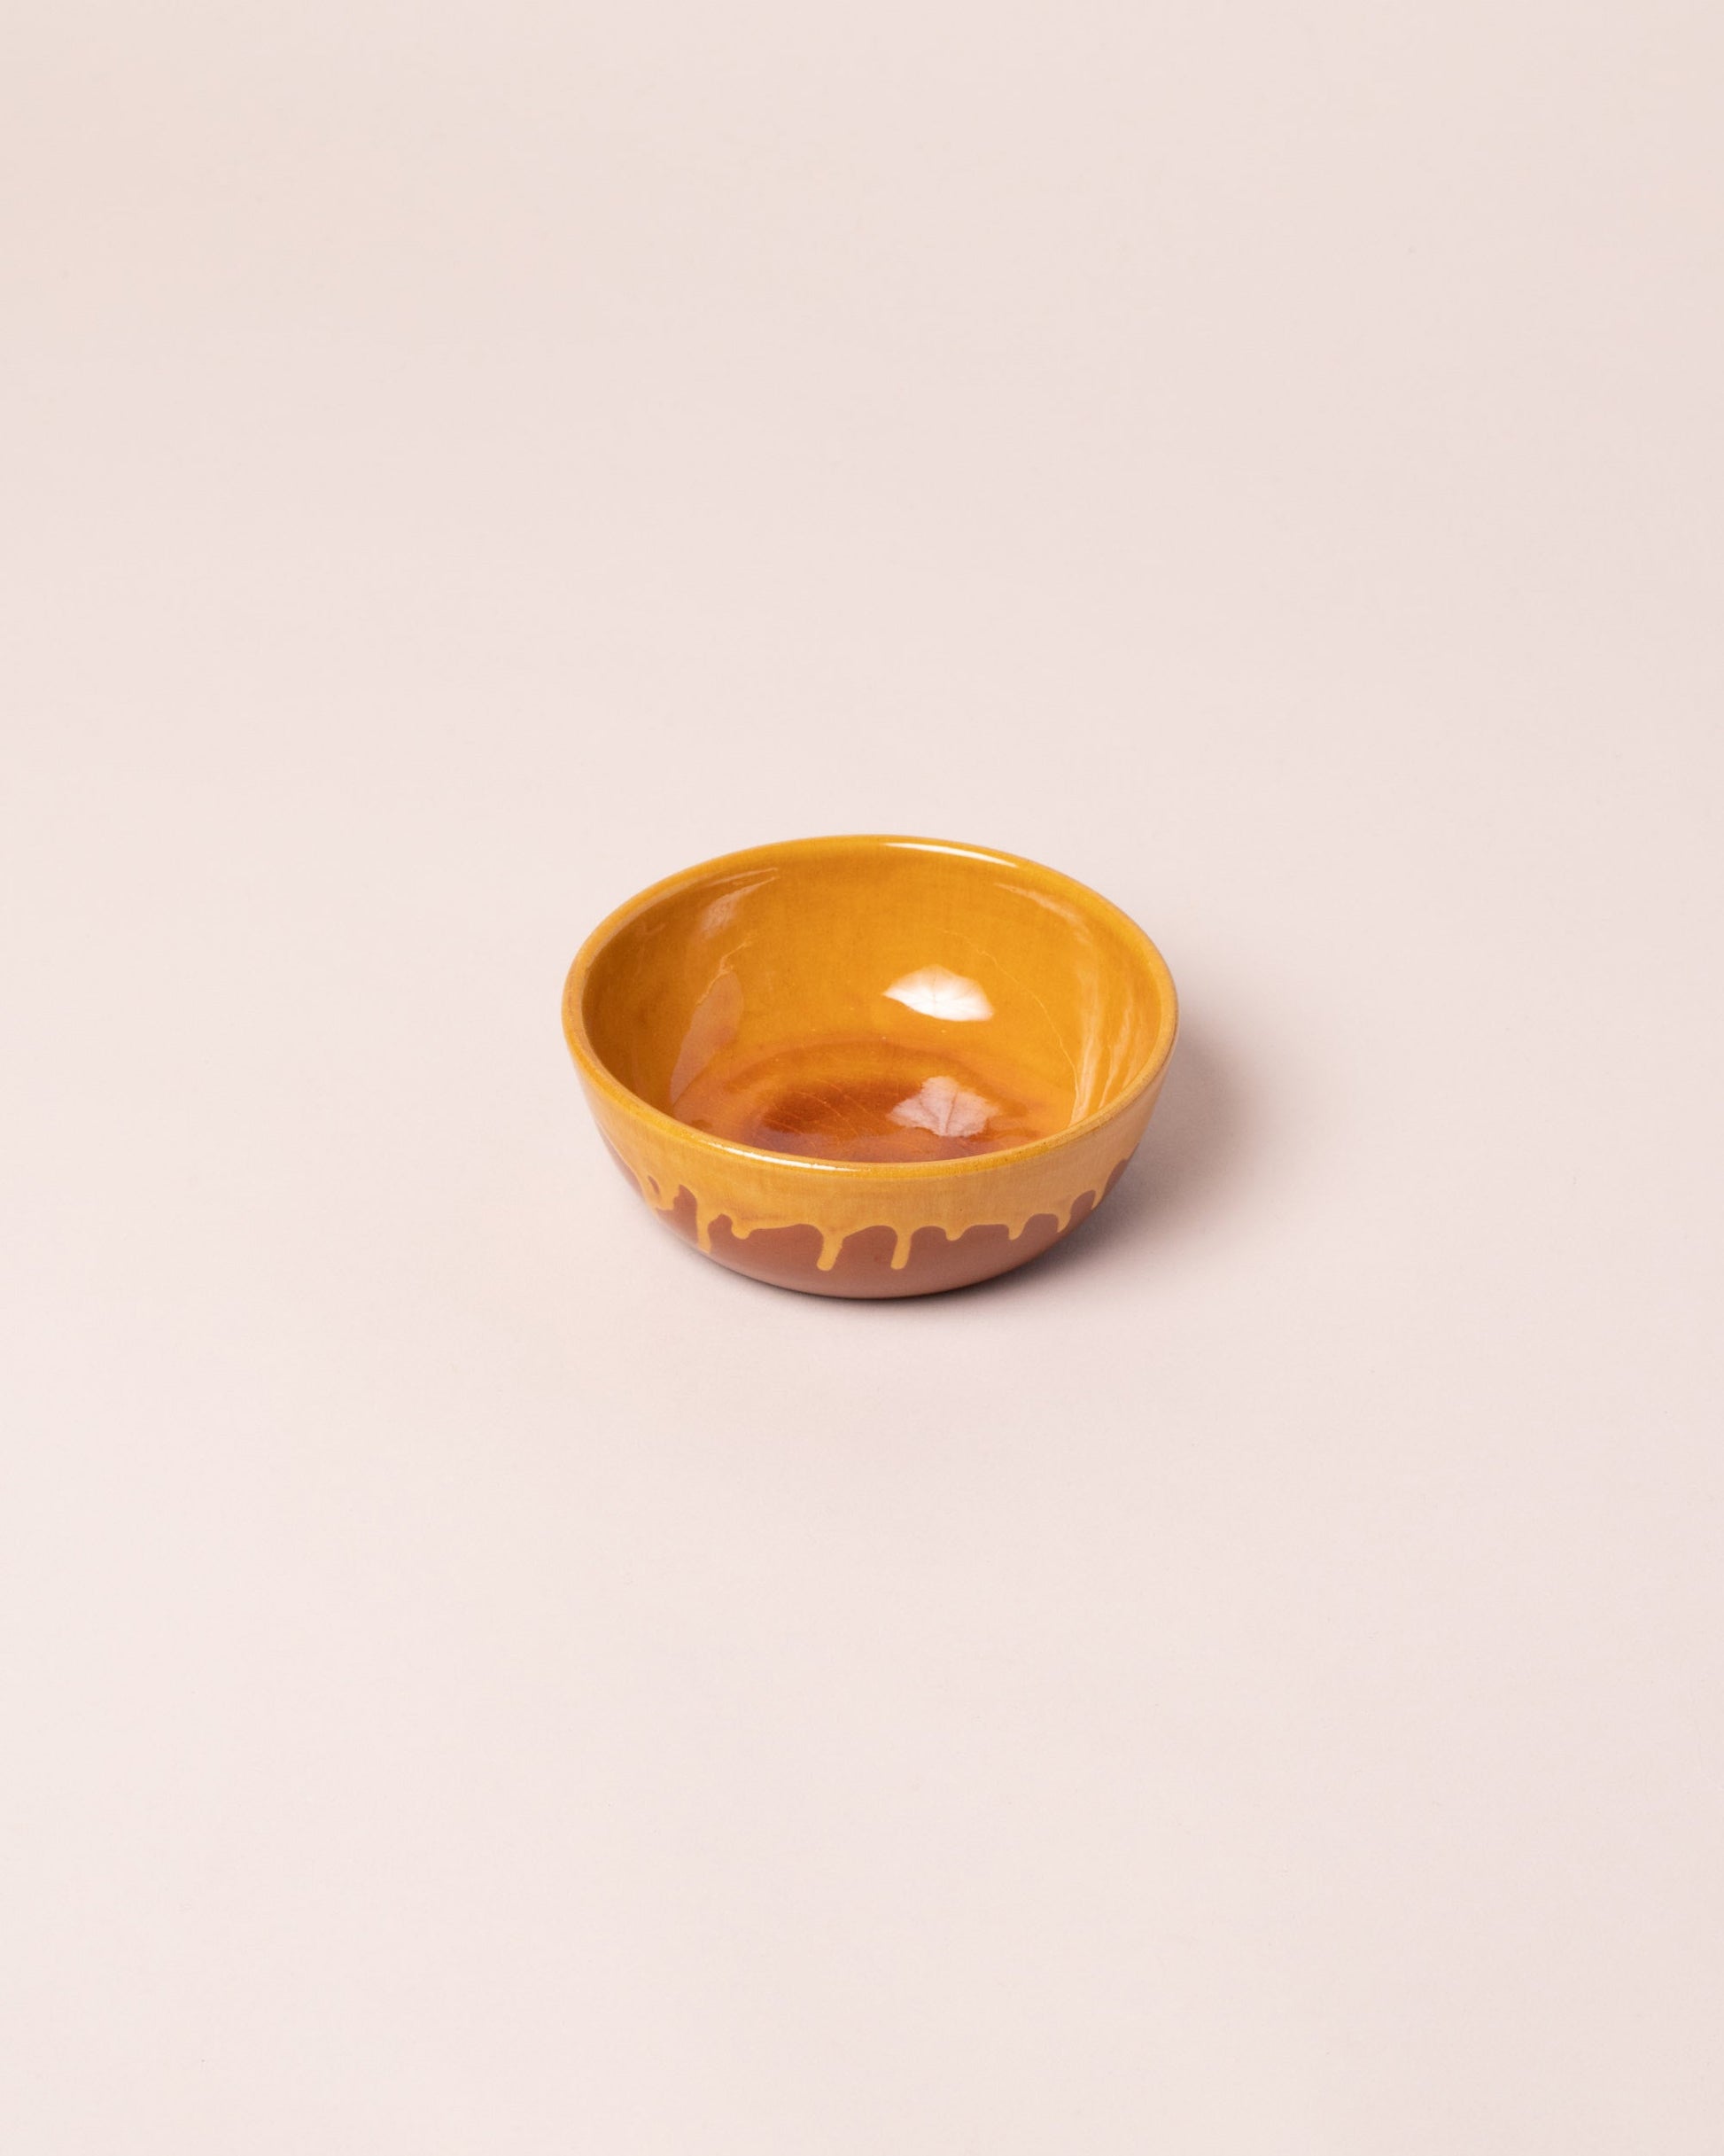 La Ceramica Vincenzo Del Monaco Caramel Yellow Cereal Bowl on light color background.